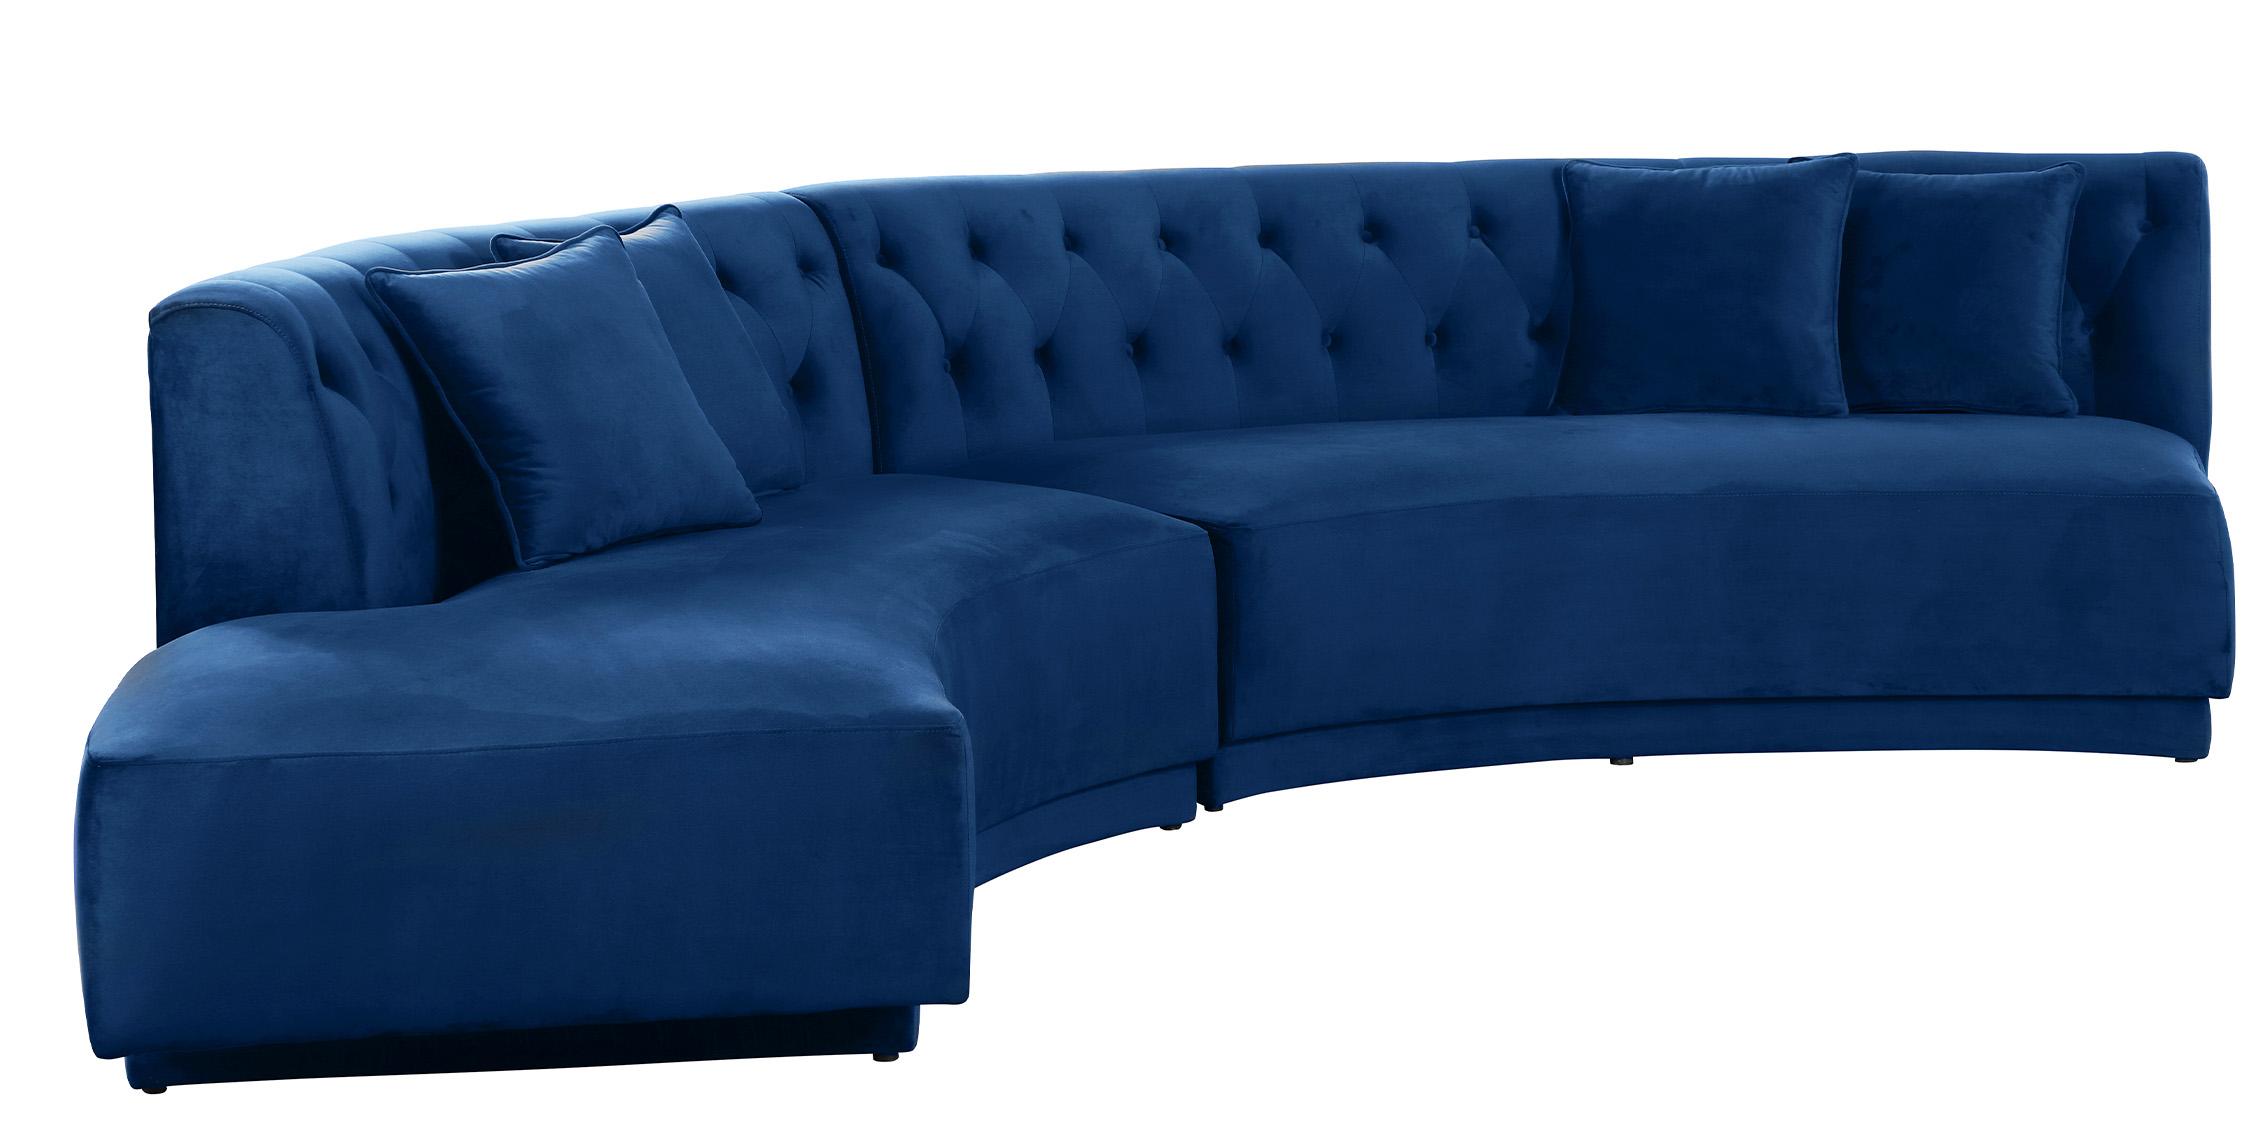 Meridian Furniture KENZI 641Navy Sectional Sofa